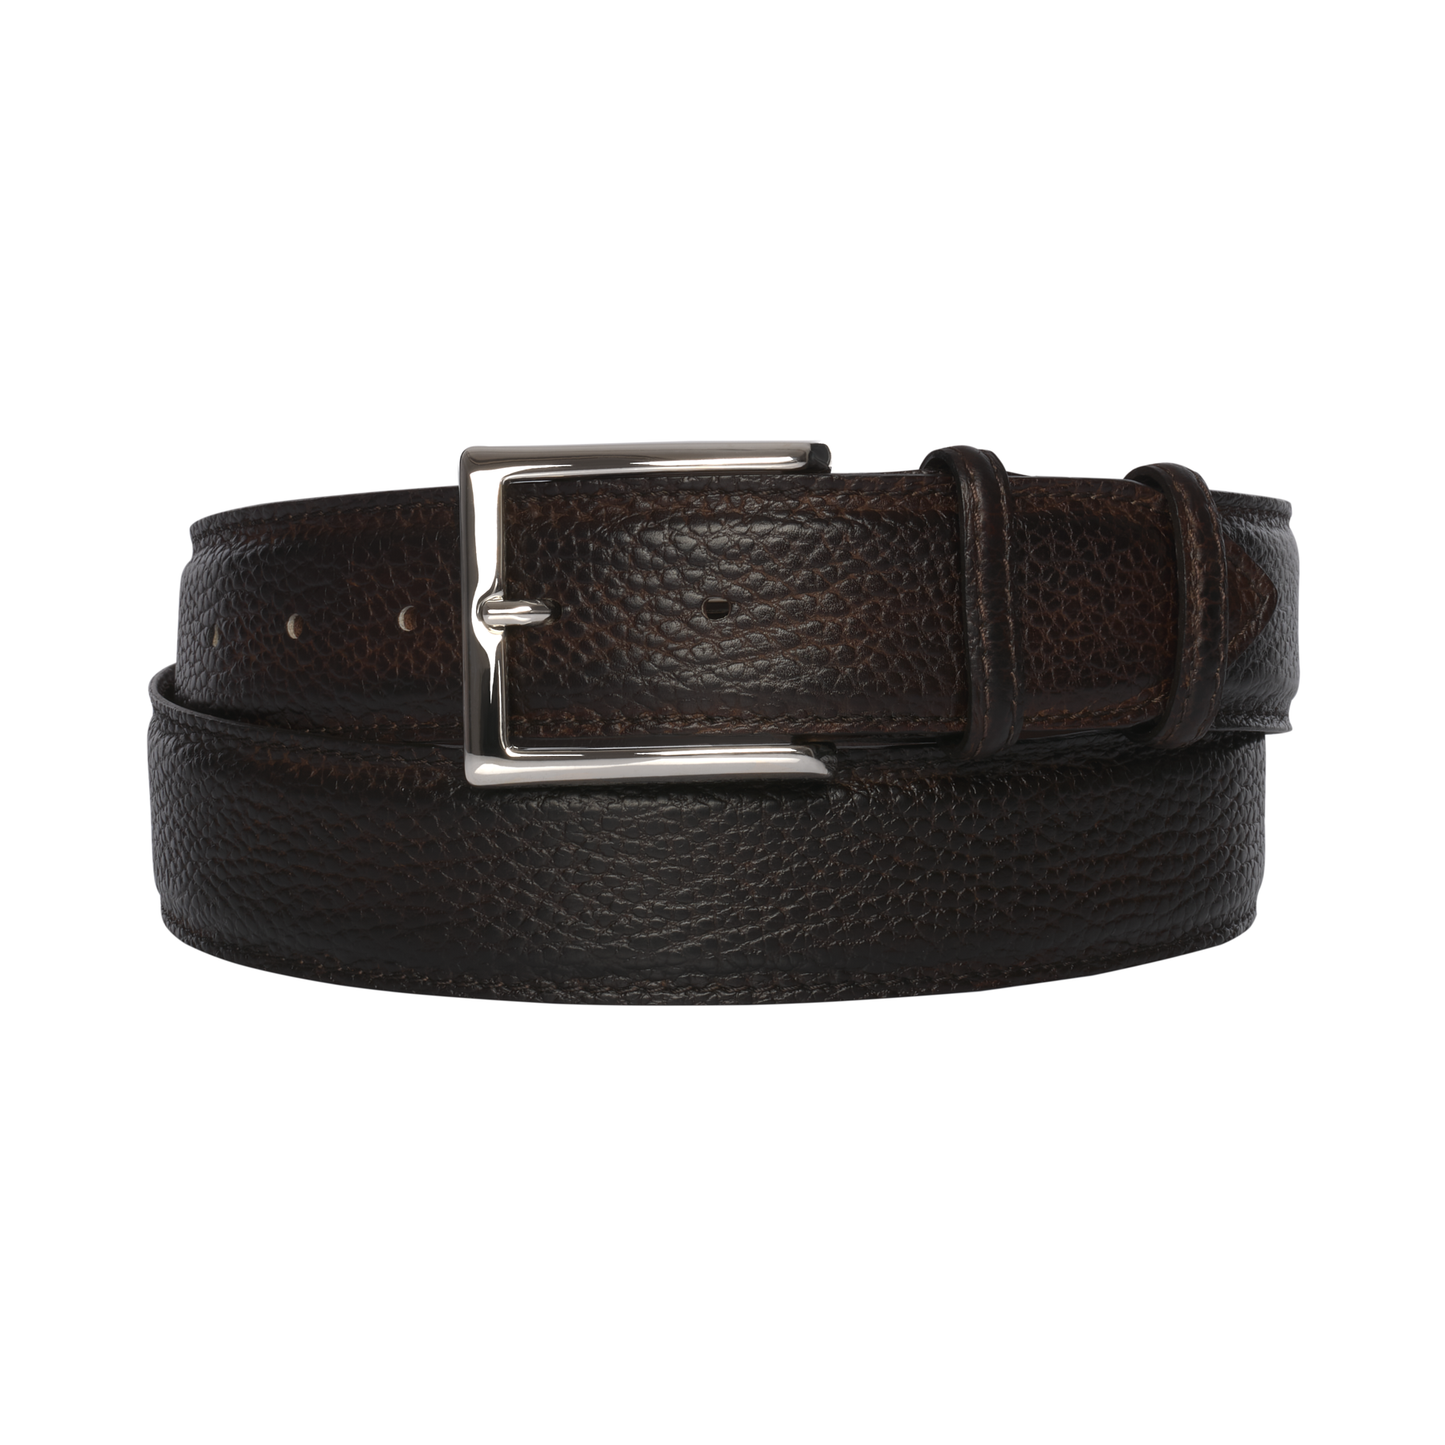 Bontoni Soft Grain Leather Belt in Antico Brown